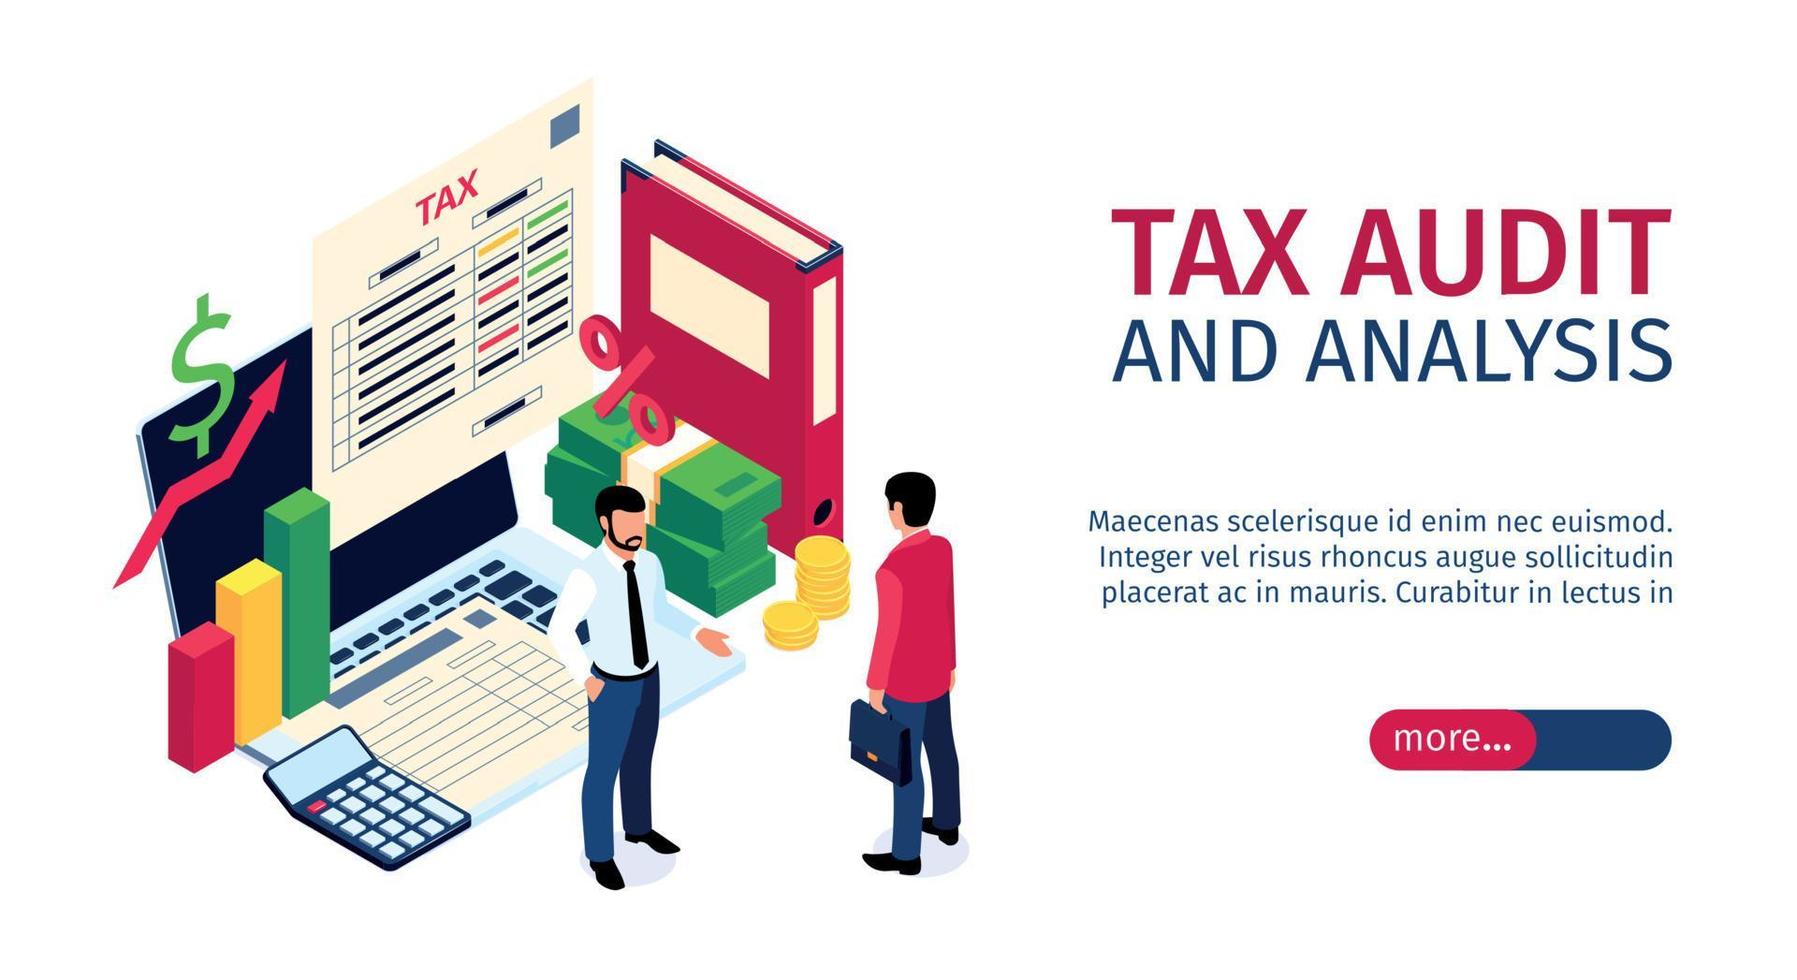 Taxes Accounting Horizontal Banner vector